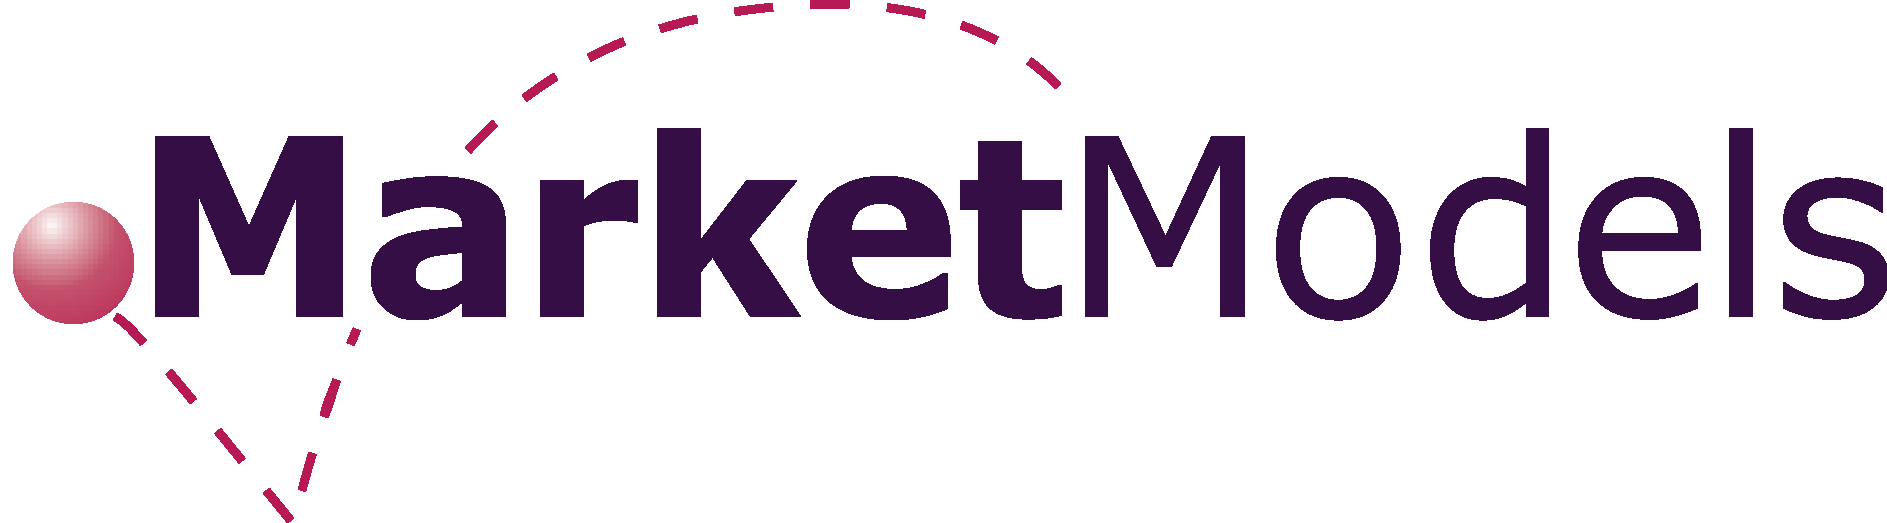 MarketModels, Inc. Logo Vector